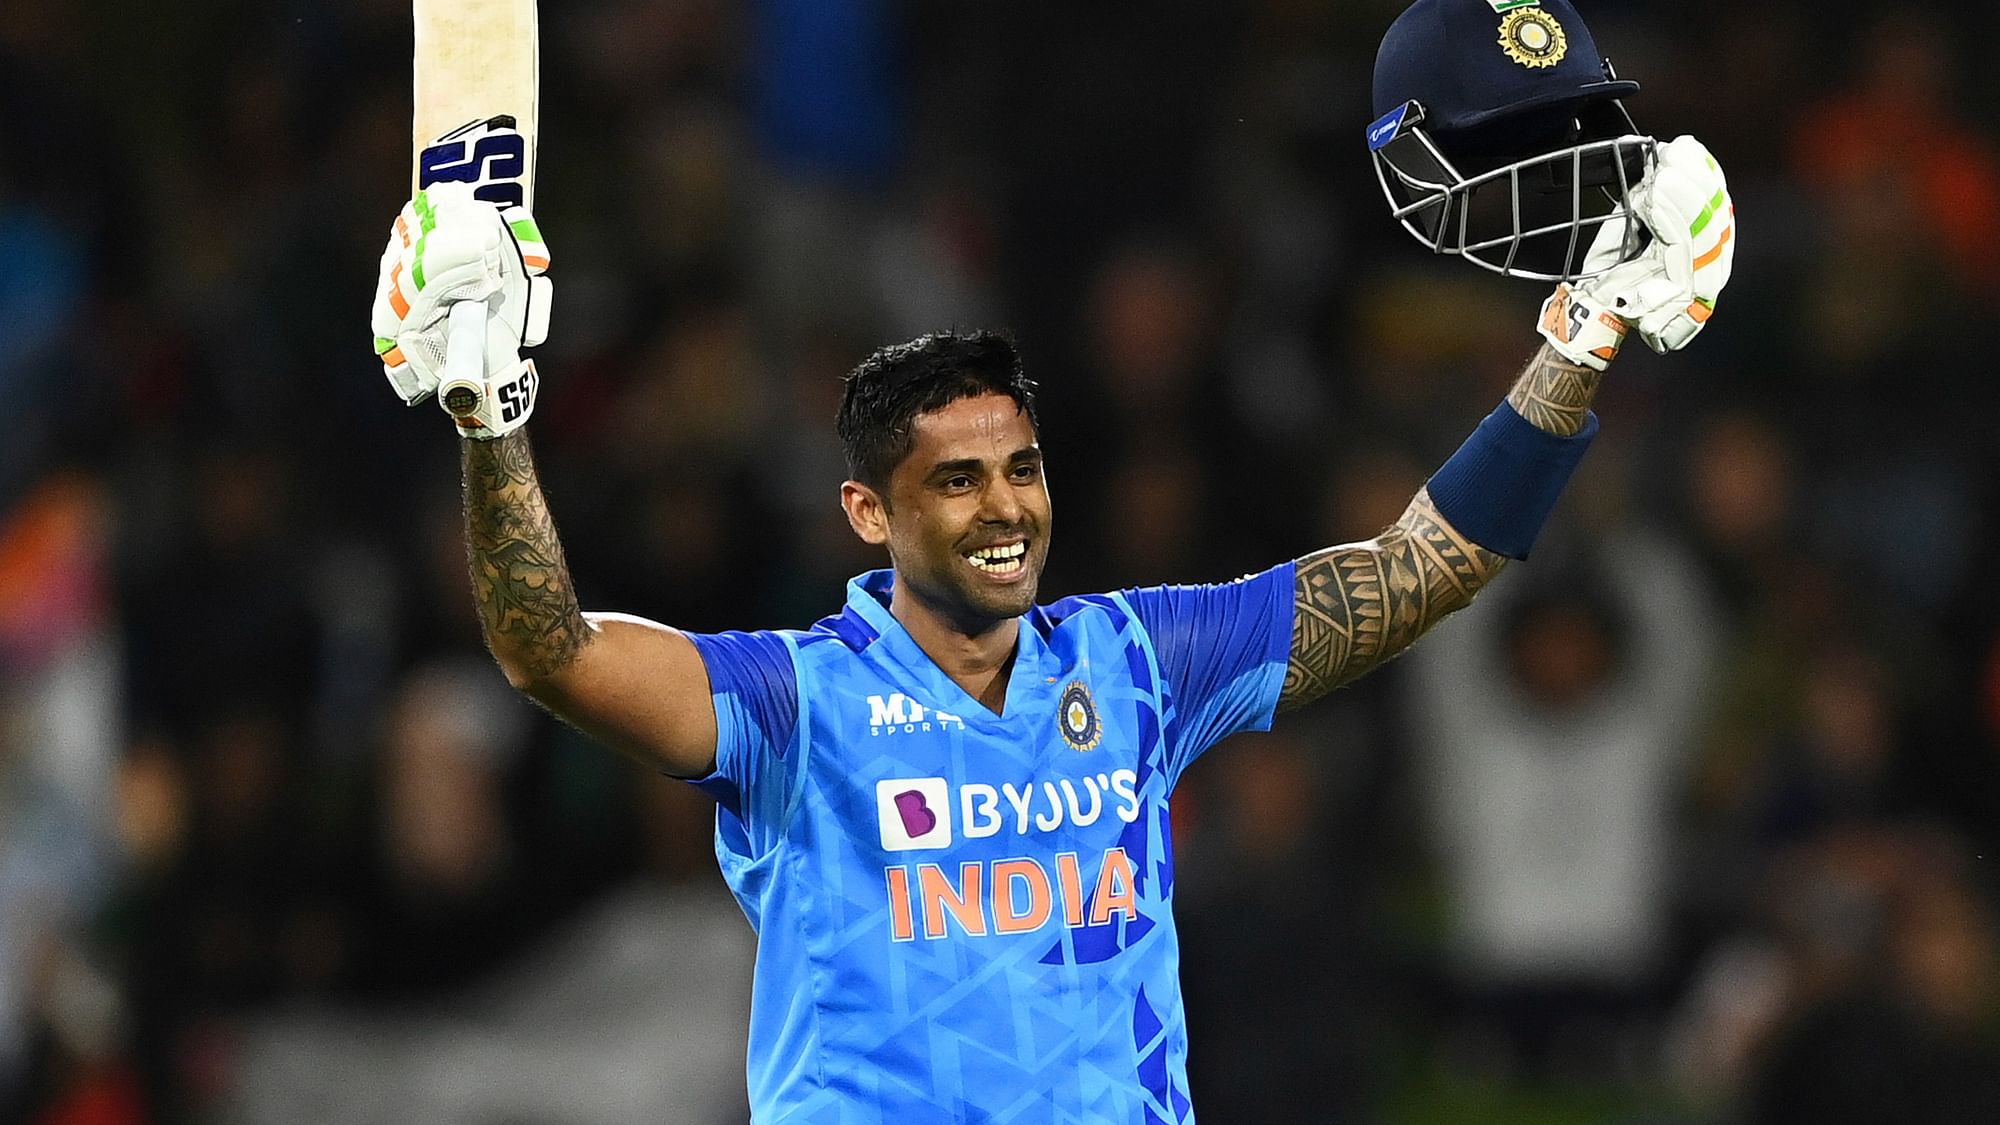 <div class="paragraphs"><p>India's Suryakumar Yadav celebrates after scoring a century during the T20 cricket international between India and New Zealand at Bay Oval, Mount Maunganui, New Zealand, Sunday, Nov. 20, 2022.</p></div>